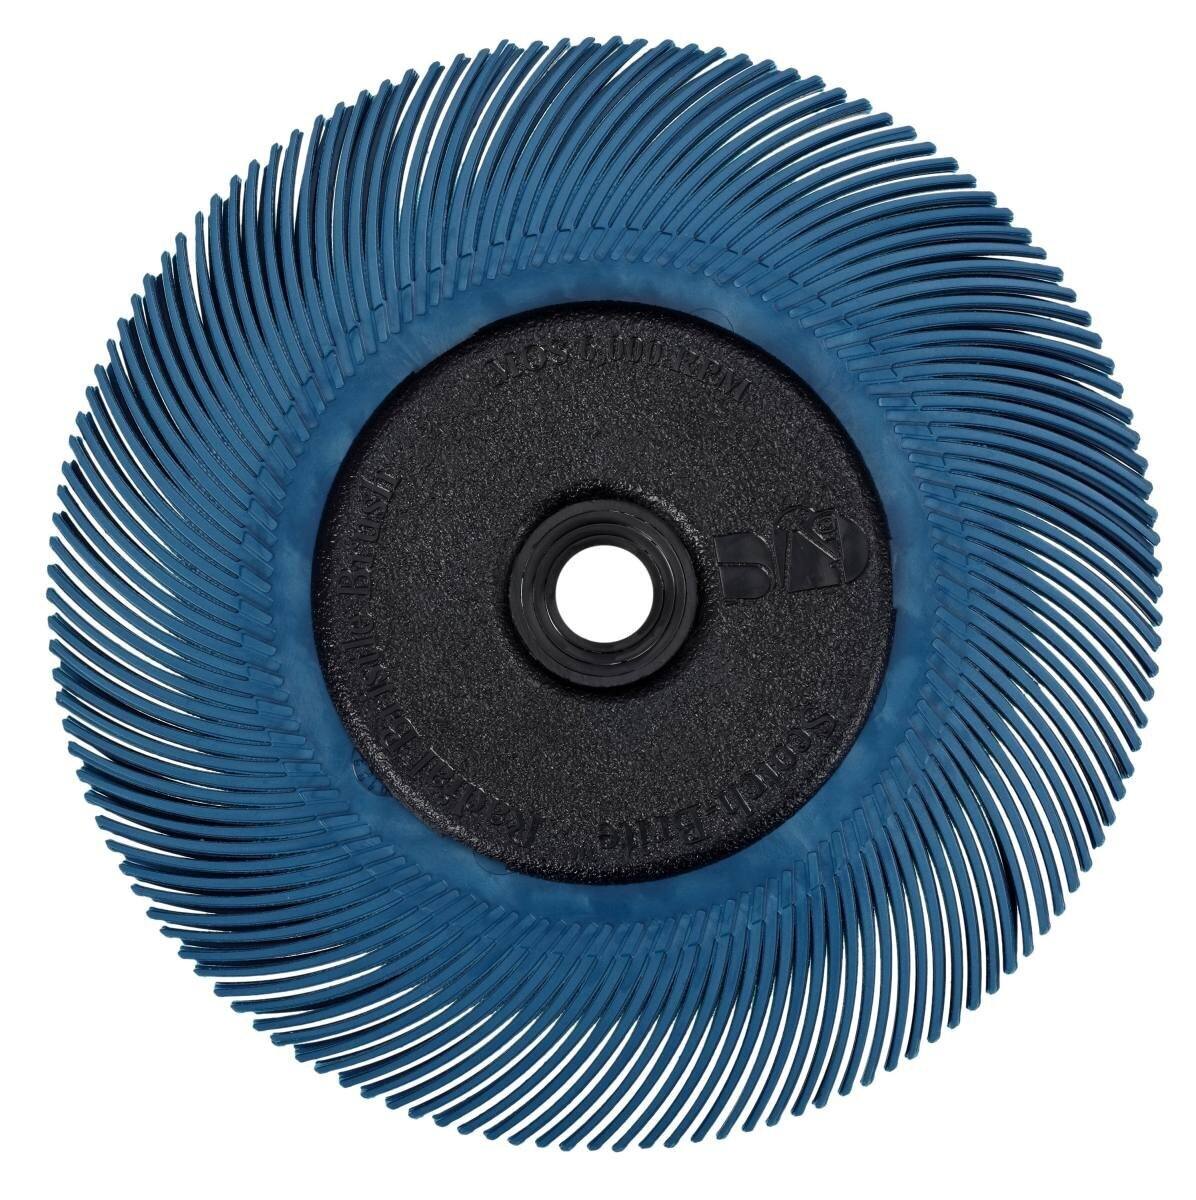 3M Scotch-Brite Radial Bristle Disc BB-ZB avec bride, bleu, 193,5 mm, P400, type C #33085